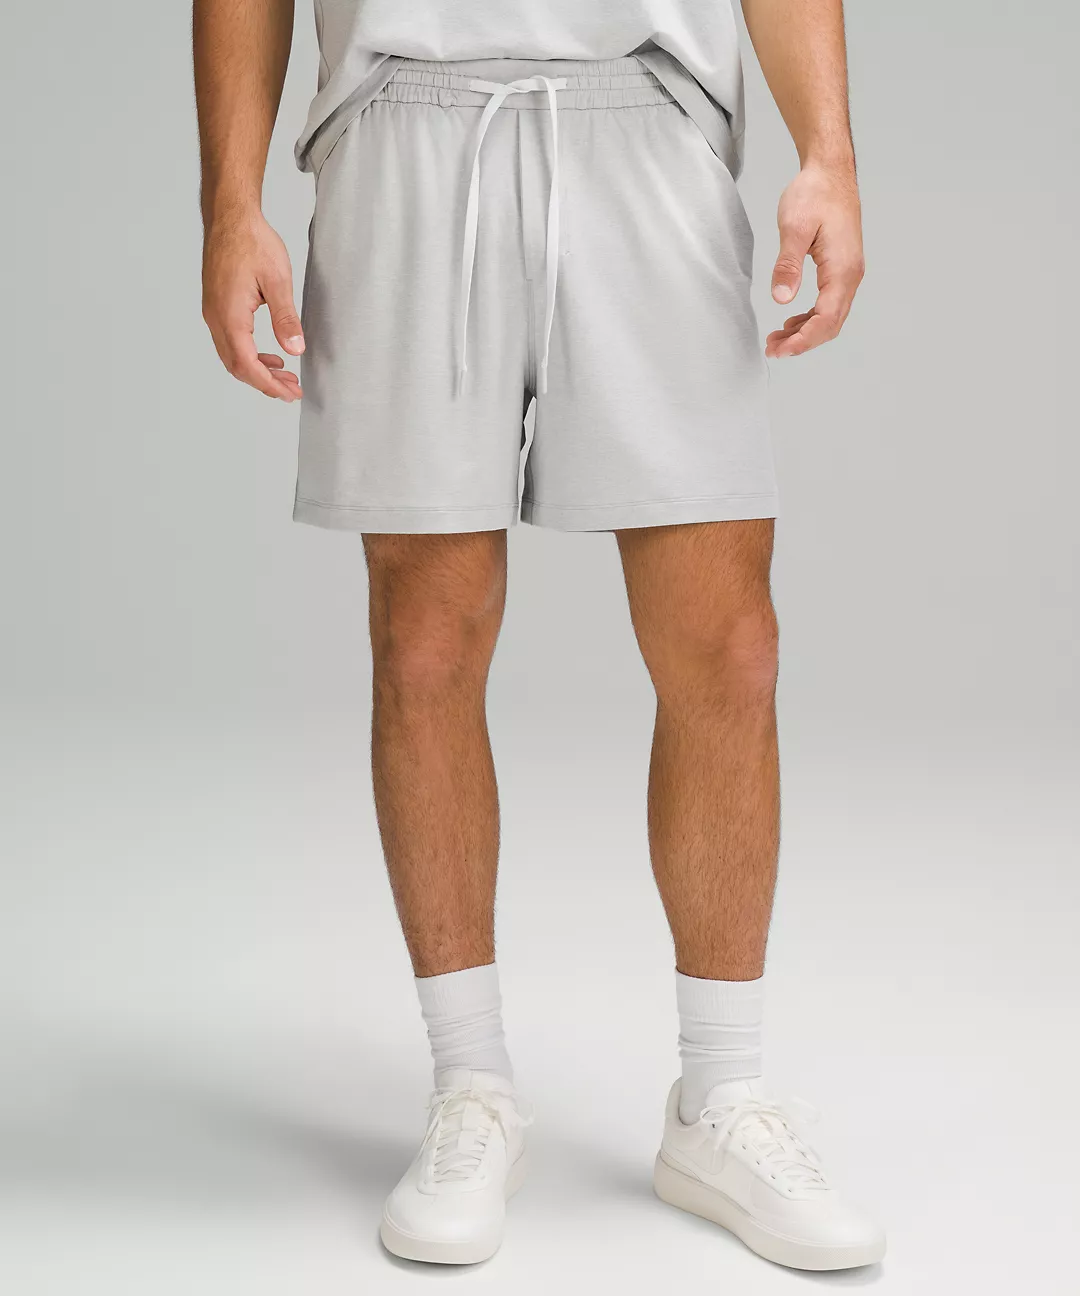 Lululemon Basketball Shorts Soft Jersey